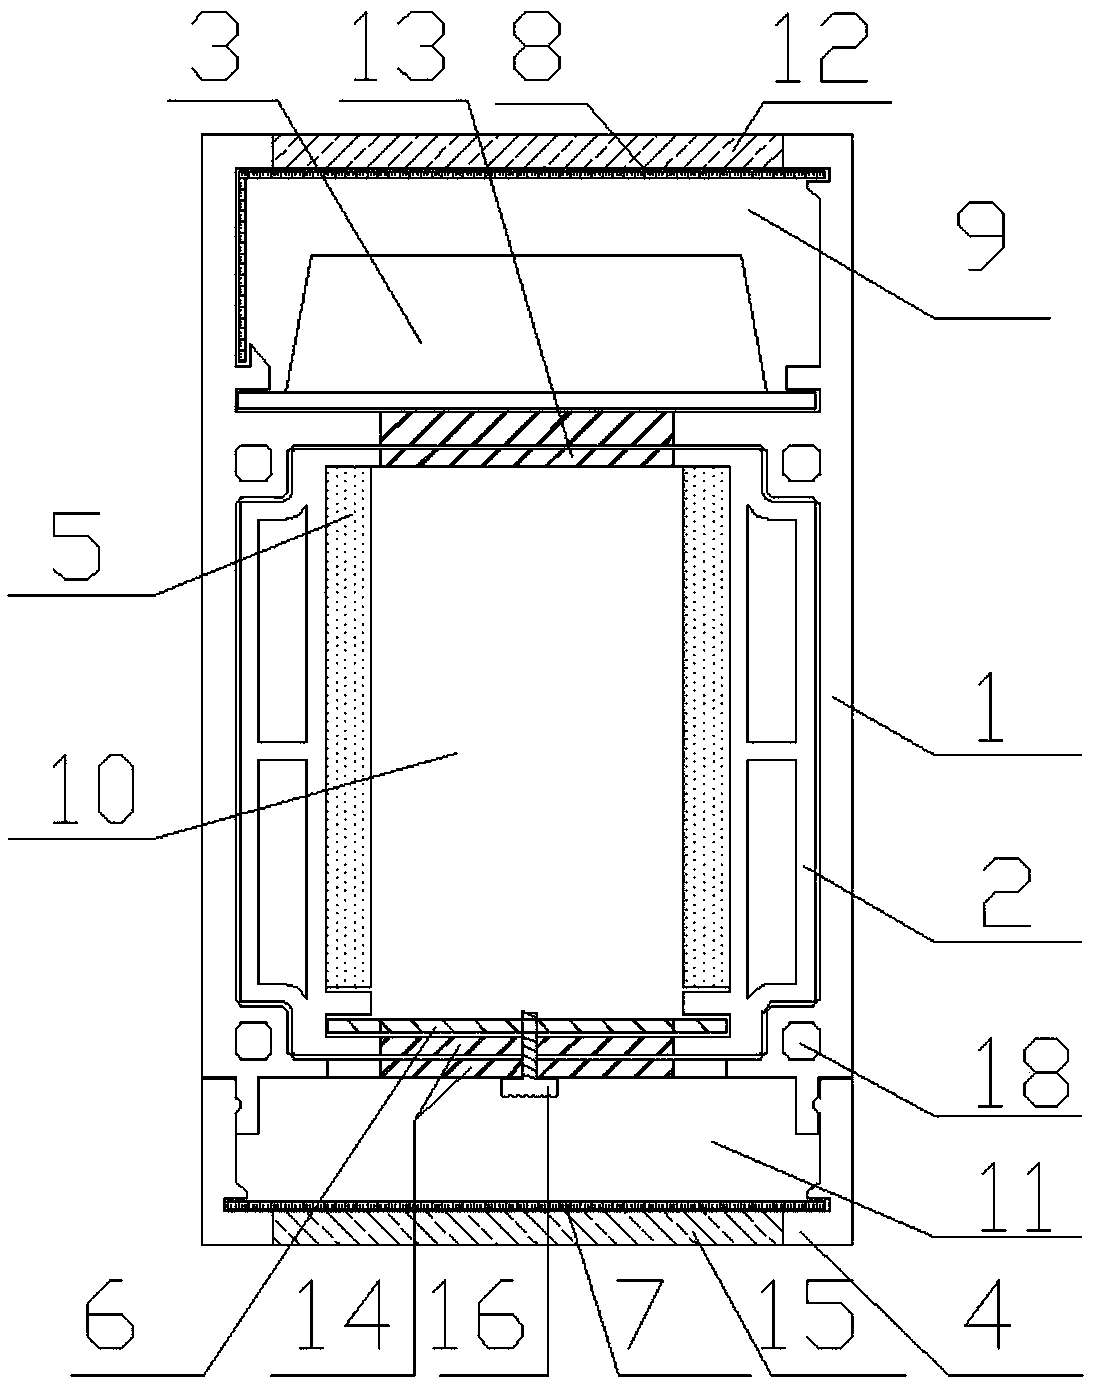 A multifunctional window ventilator